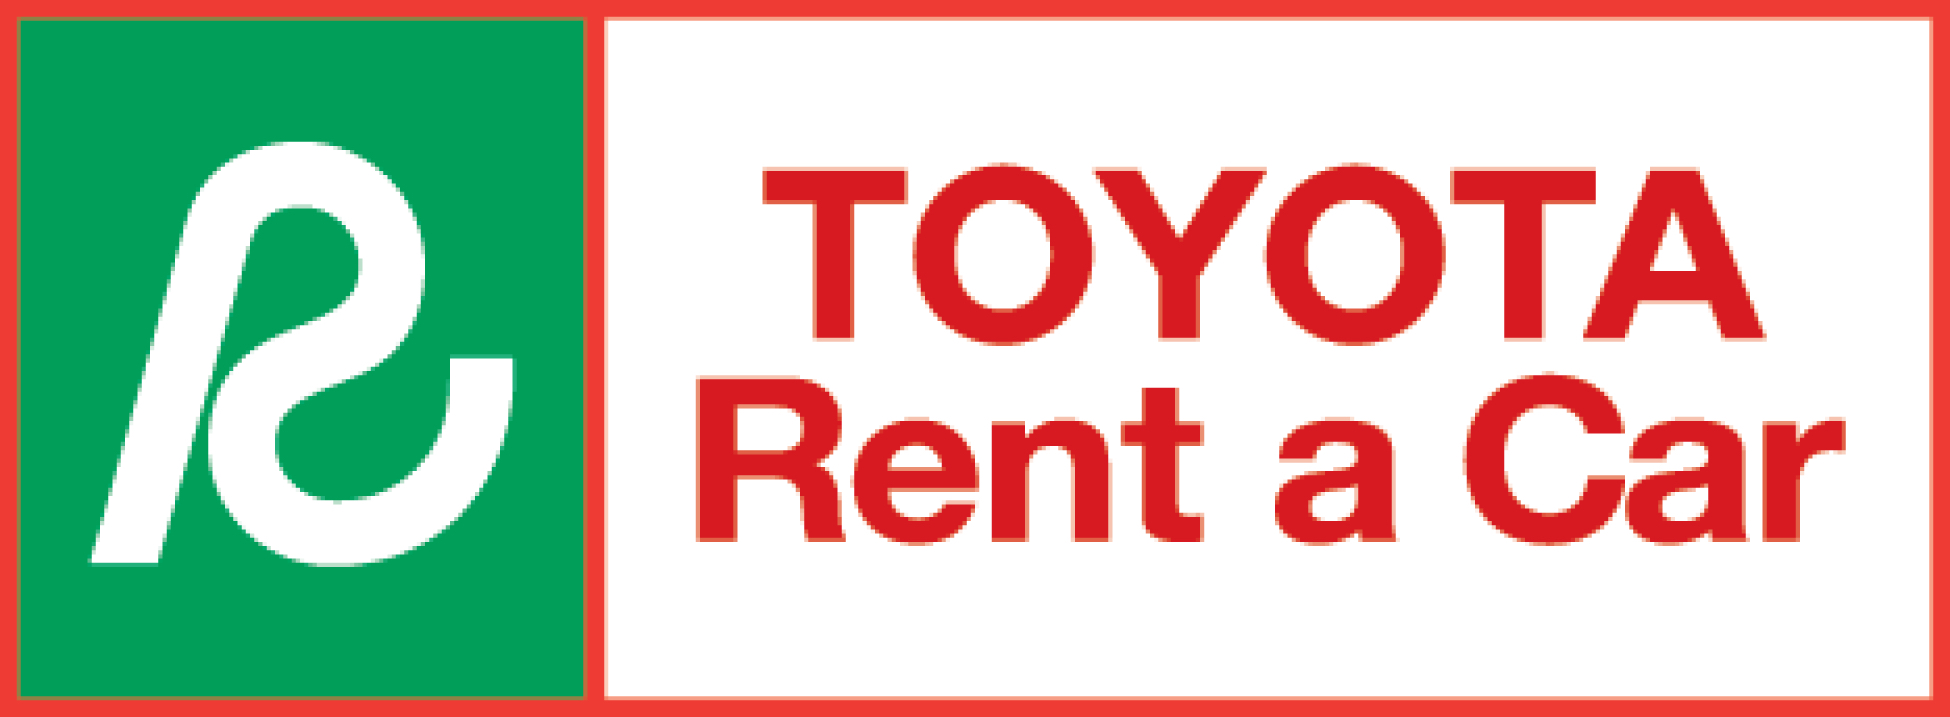 Toyota Rental Car